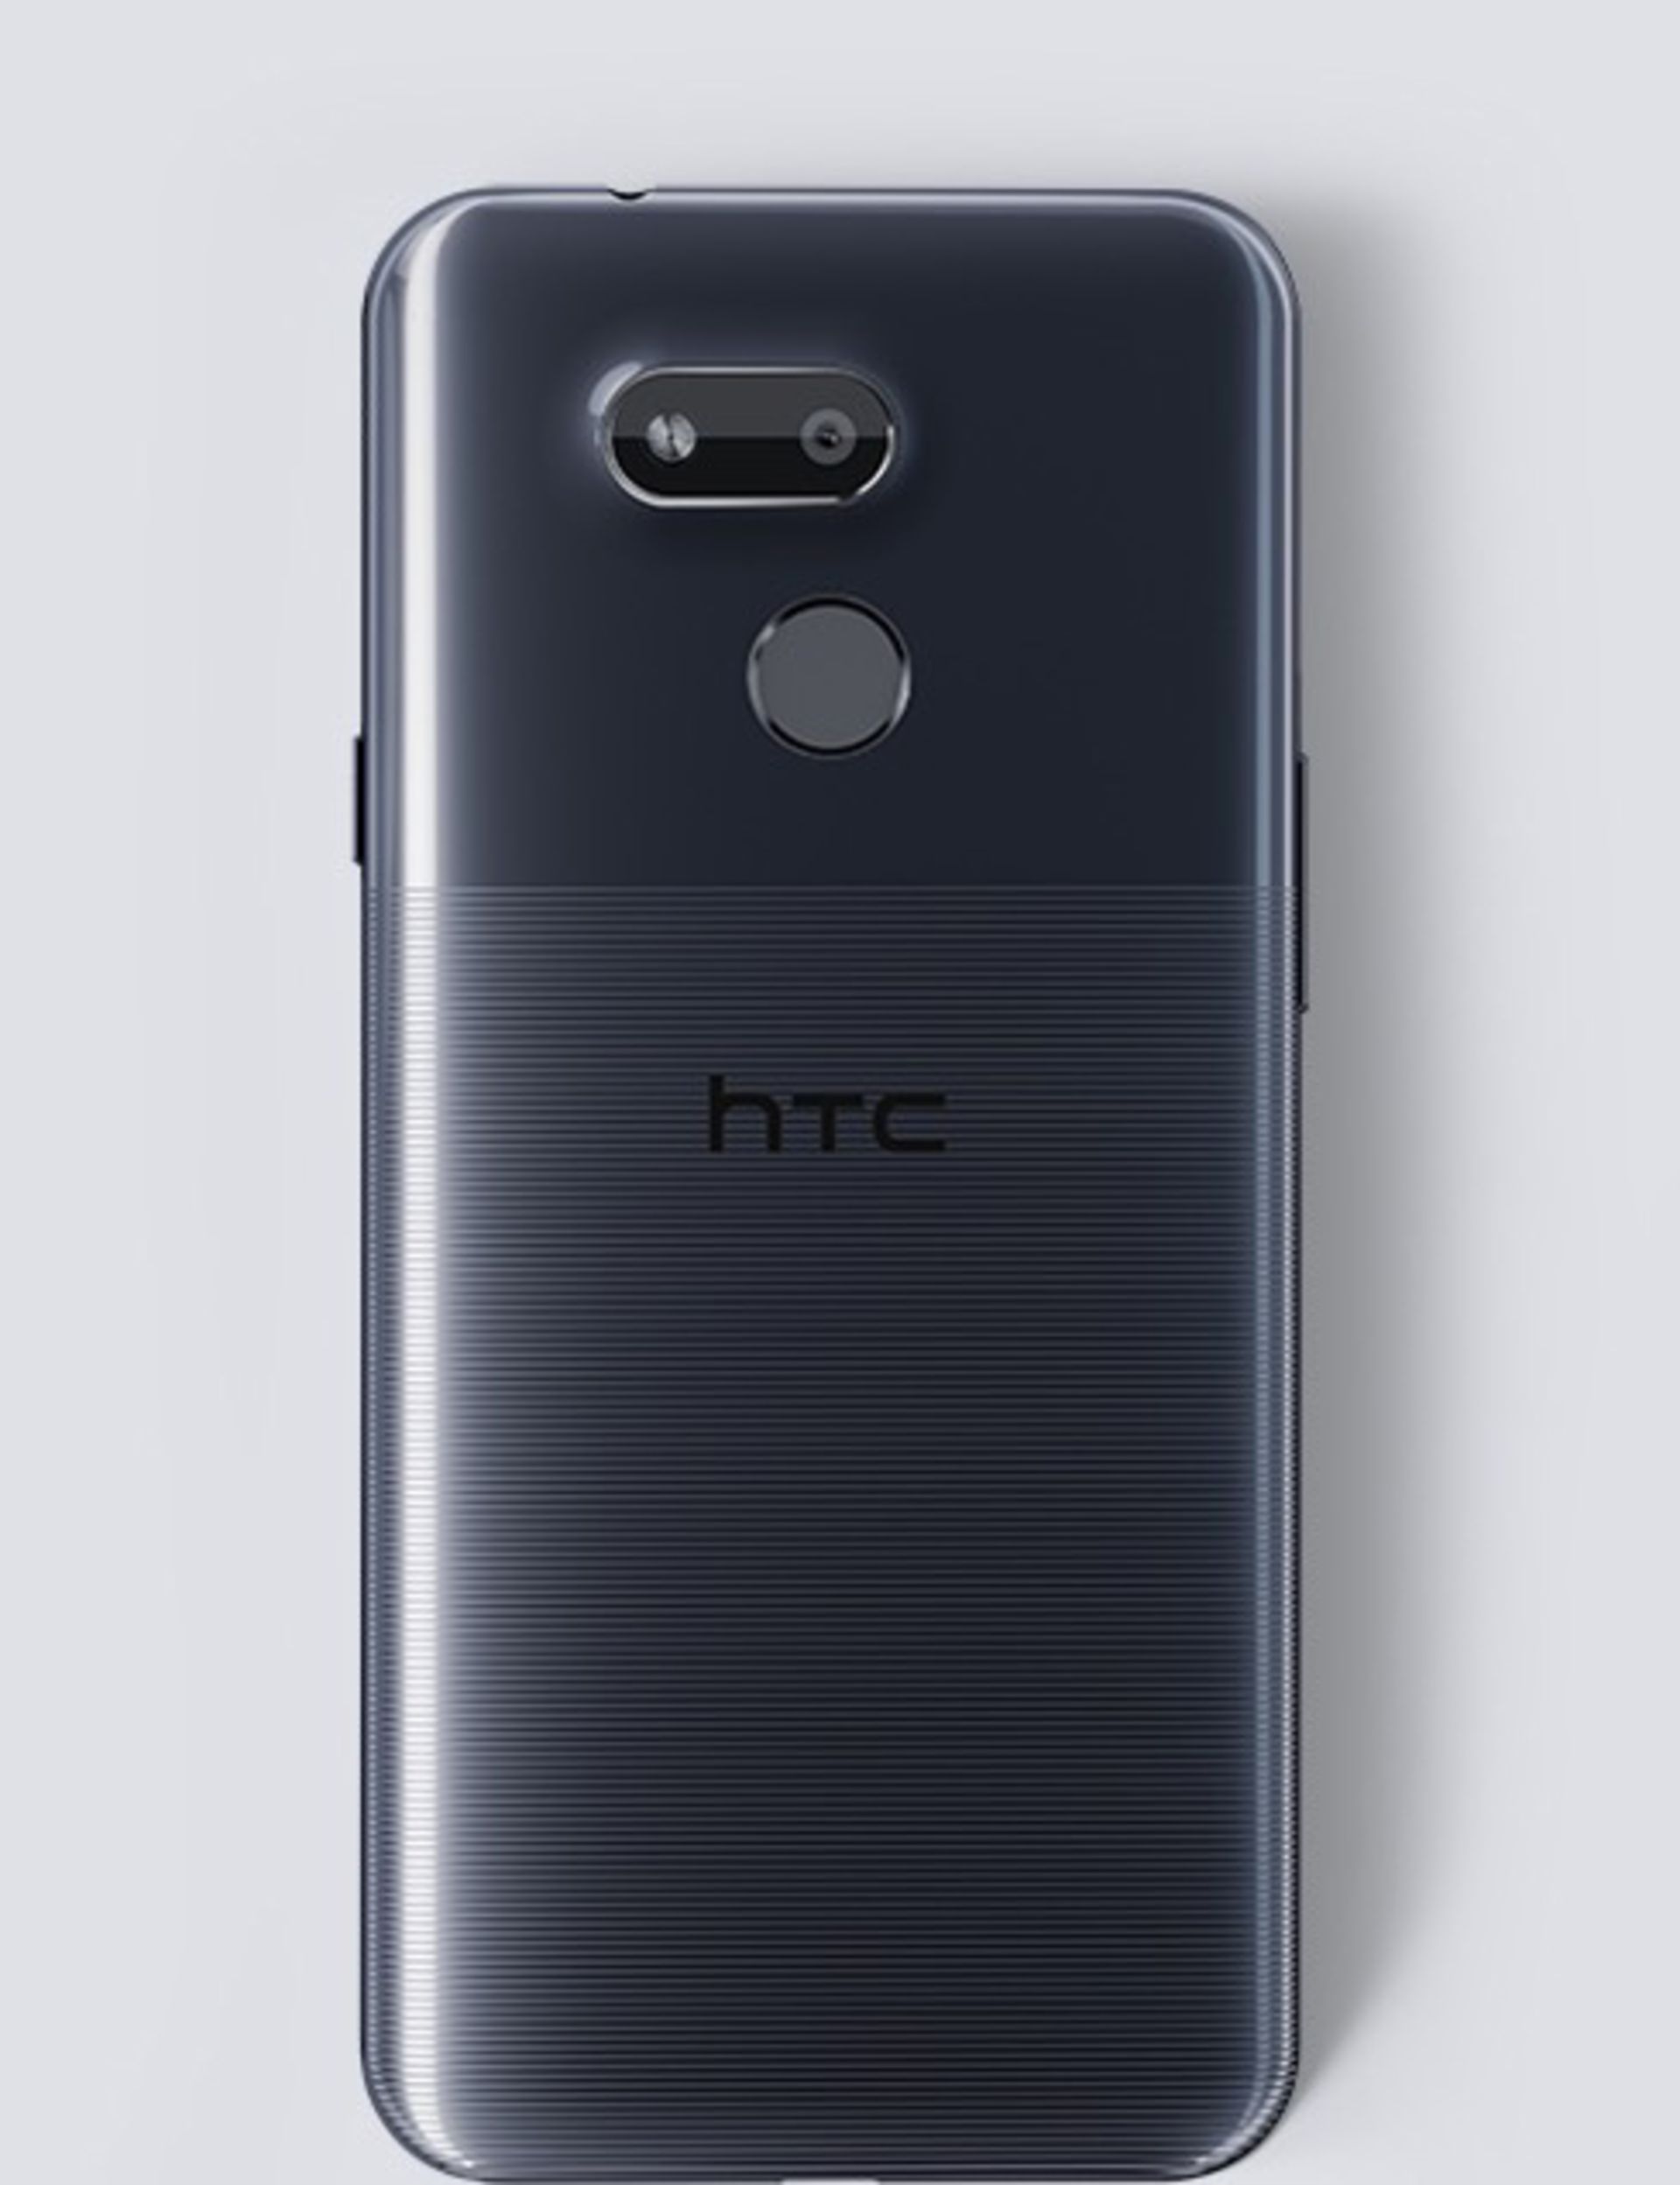 اچ تی سی دیزایر 12 اس / HTC Desire 12s